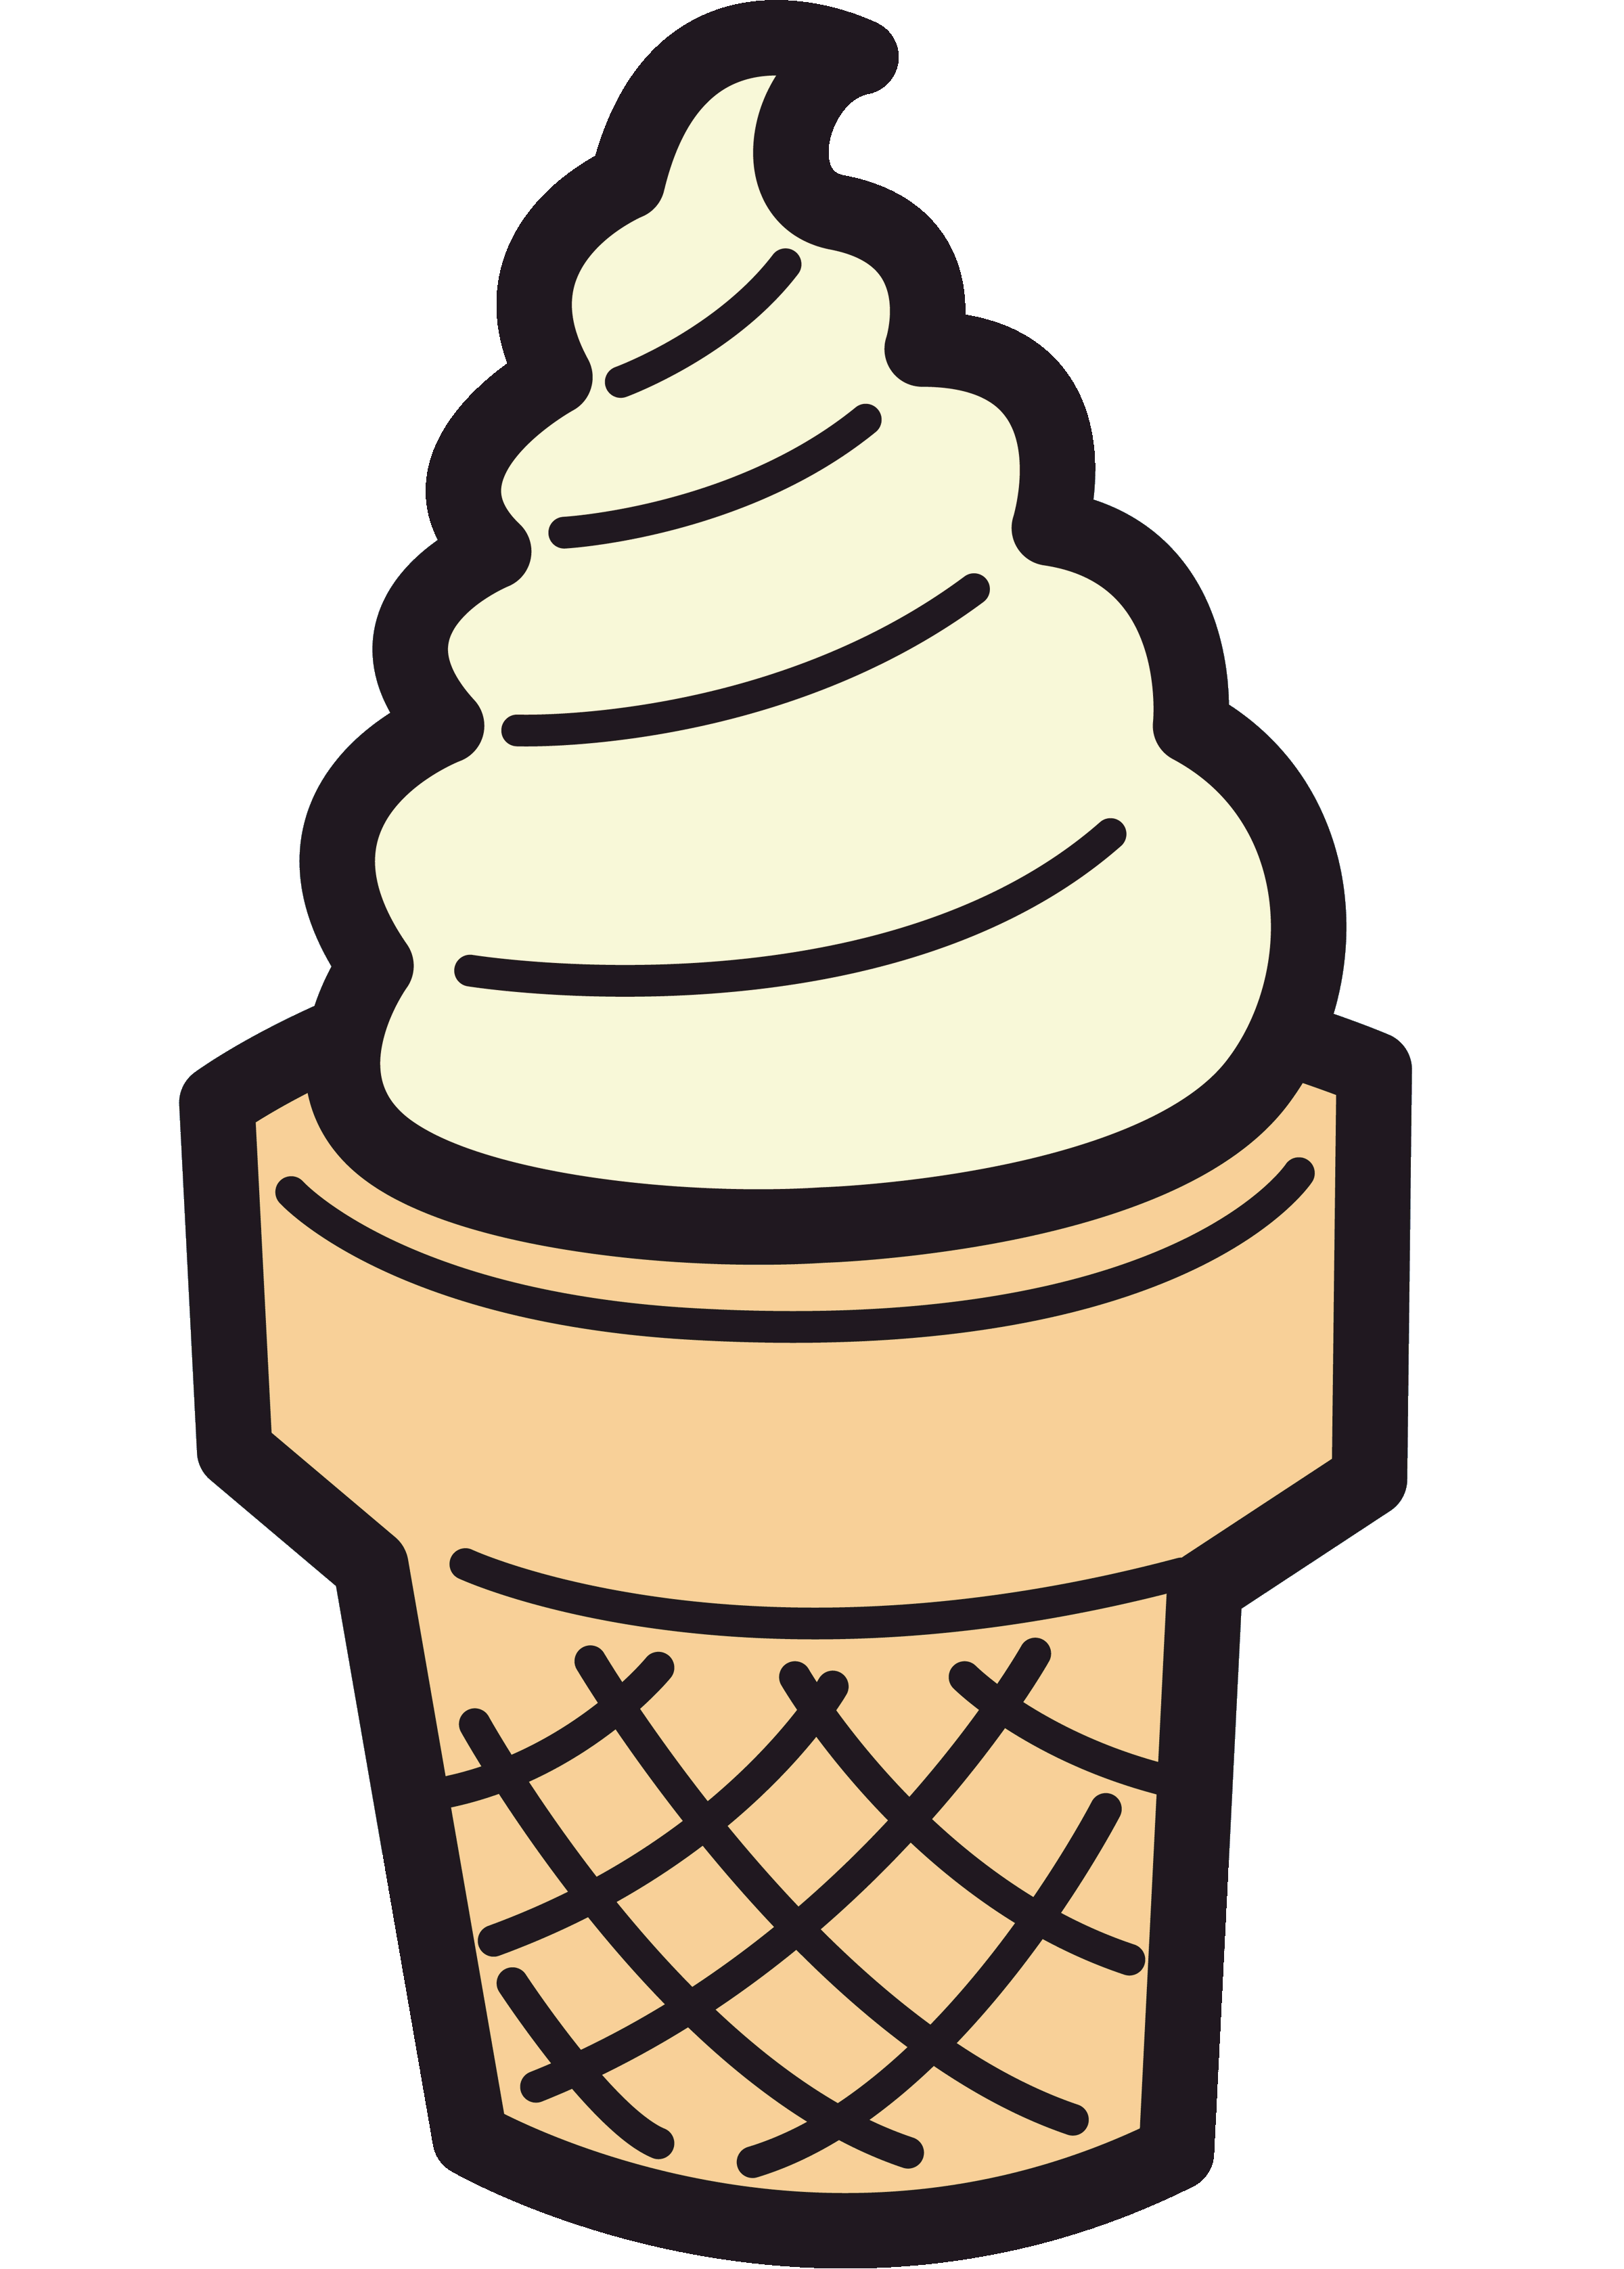 Ice Cream Cone Clip Art | Clipart Panda - Free Clipart Images